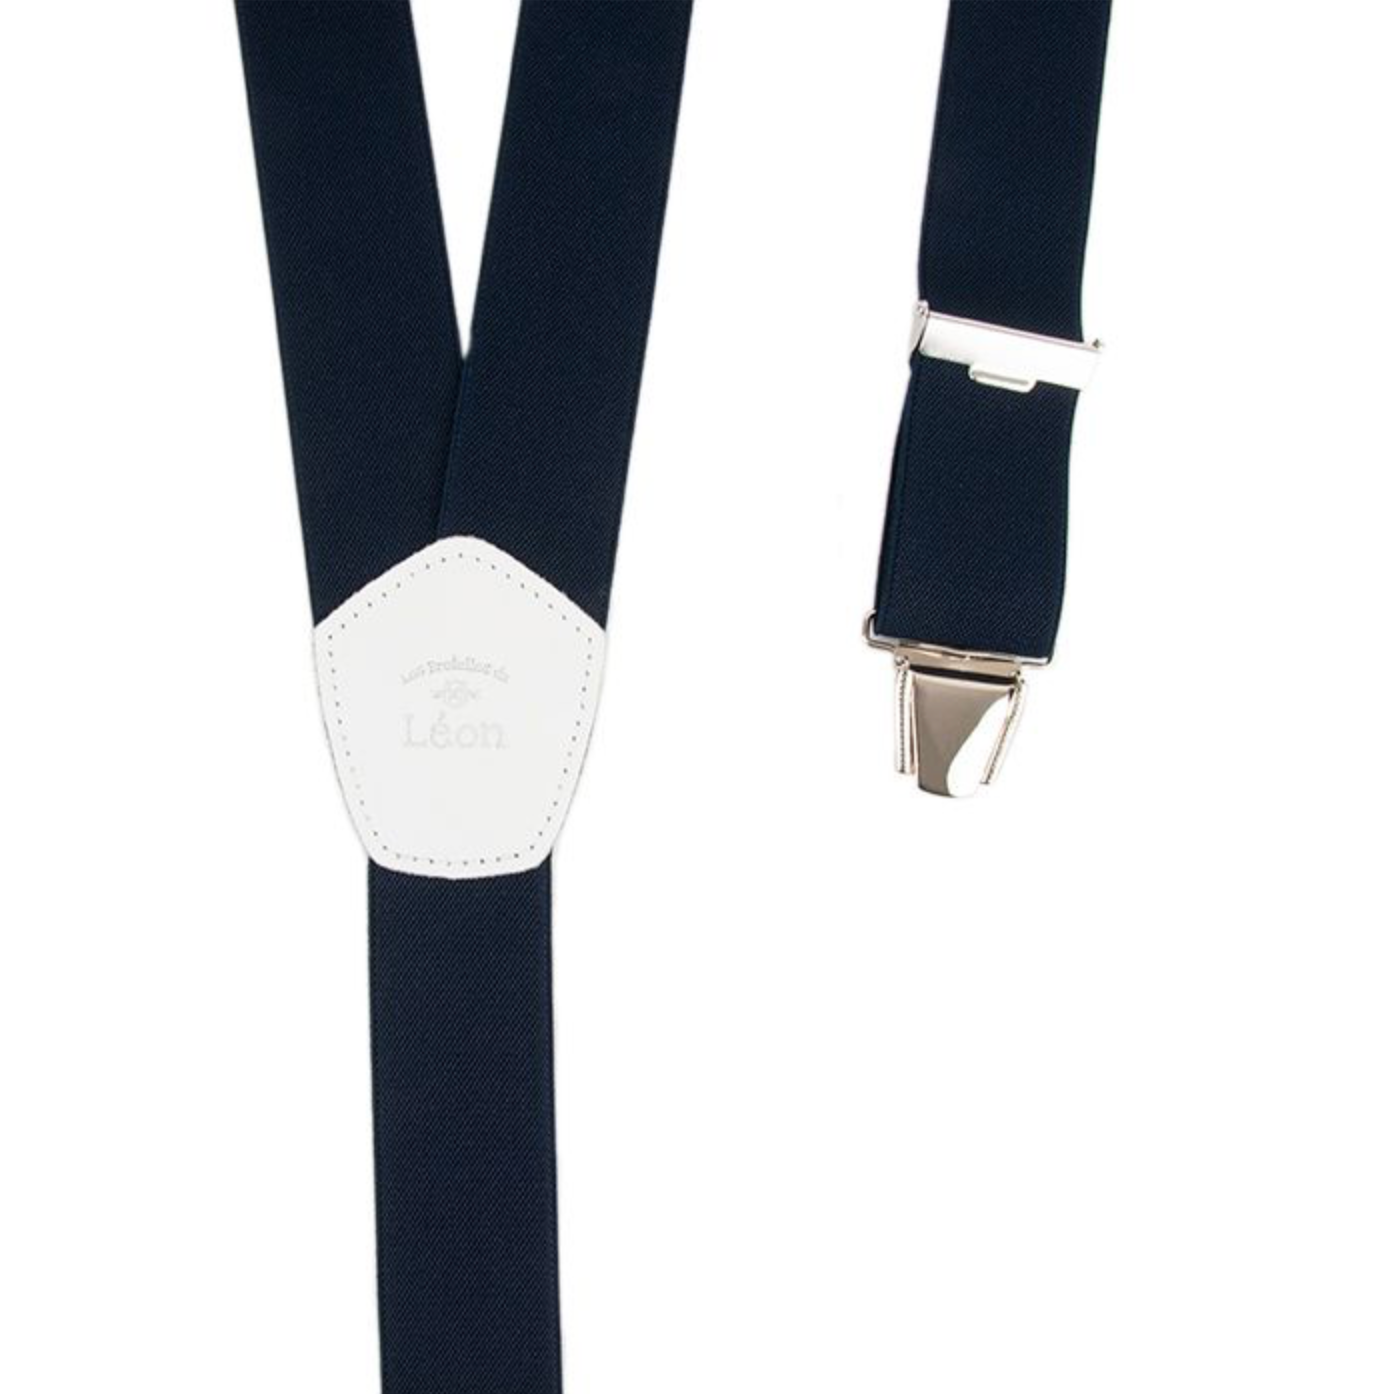 Large - Suspenders